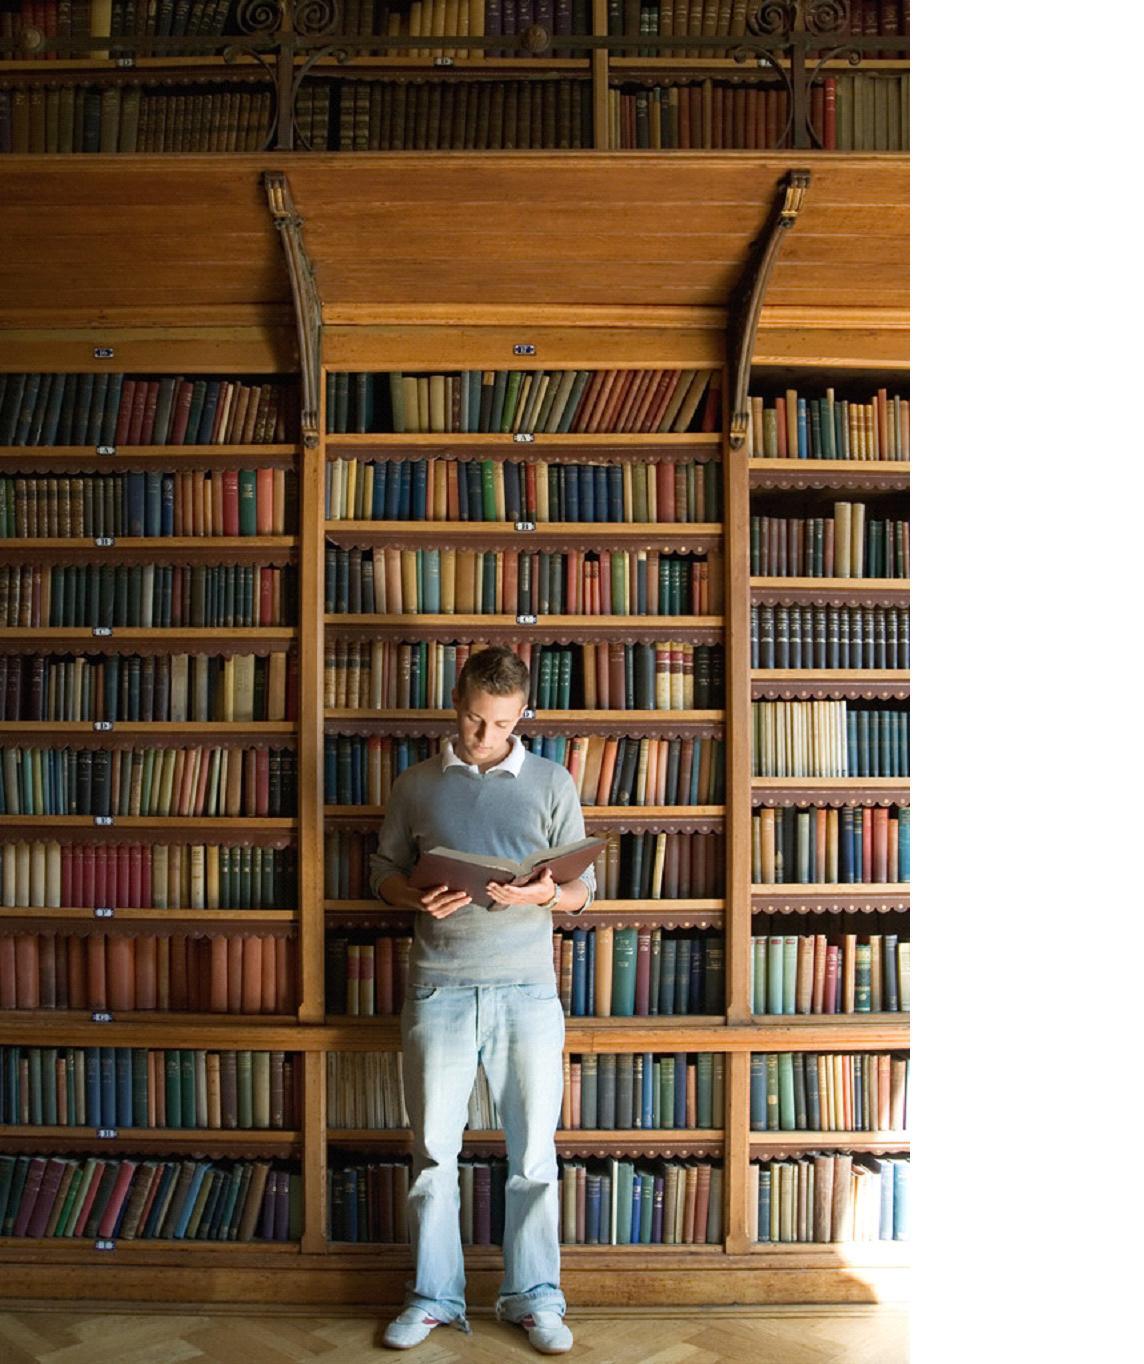 Humans book. Люди в библиотеке. Чтение в библиотеке. Человек с книгой в библиотеке. Много книг.